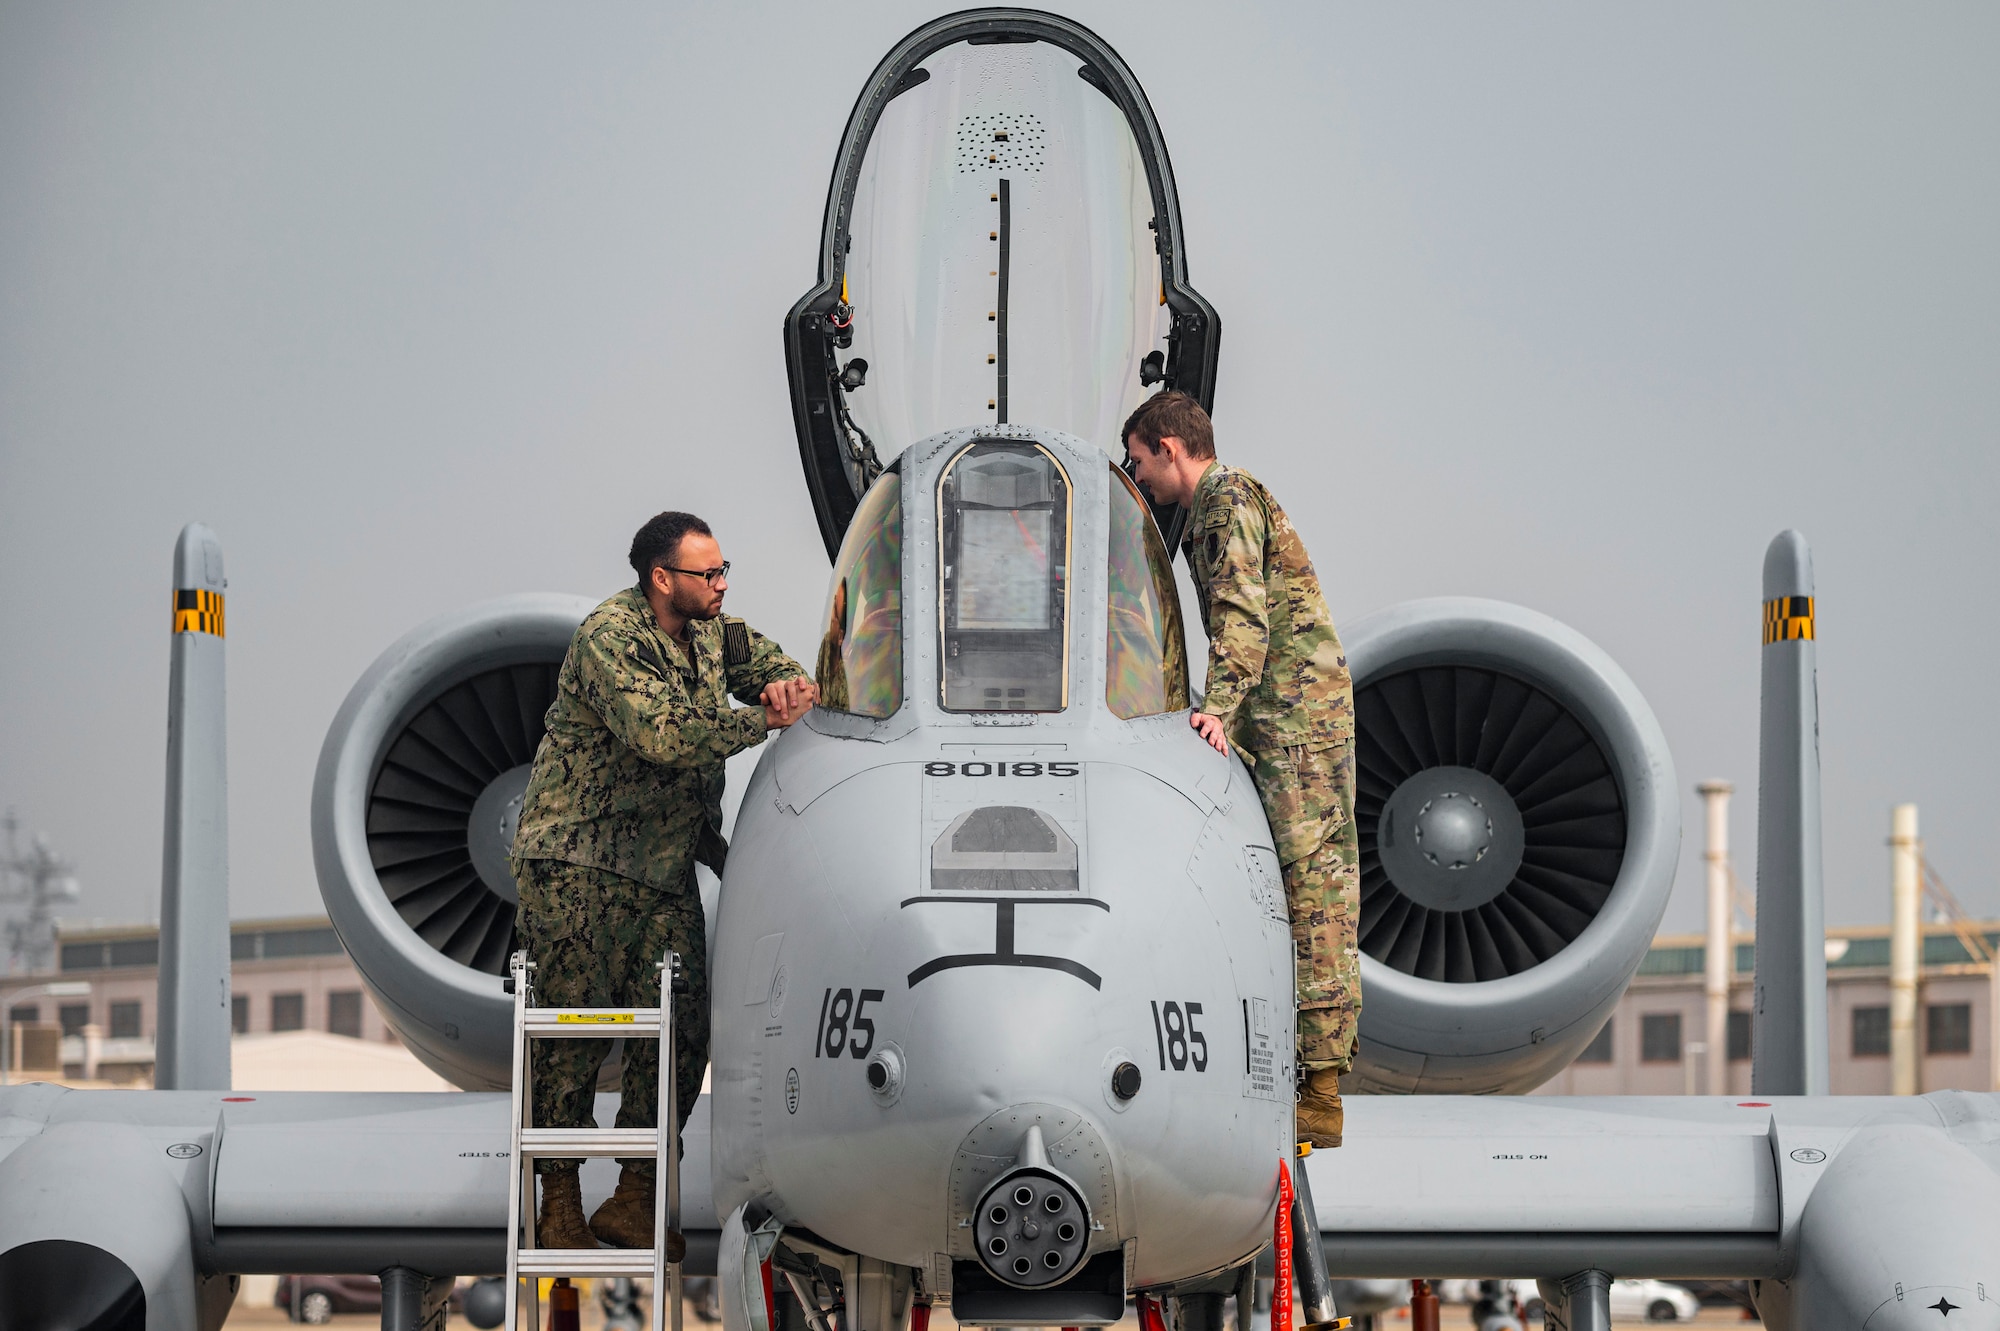 Airman and Seaman discuss A-10 capabilities.